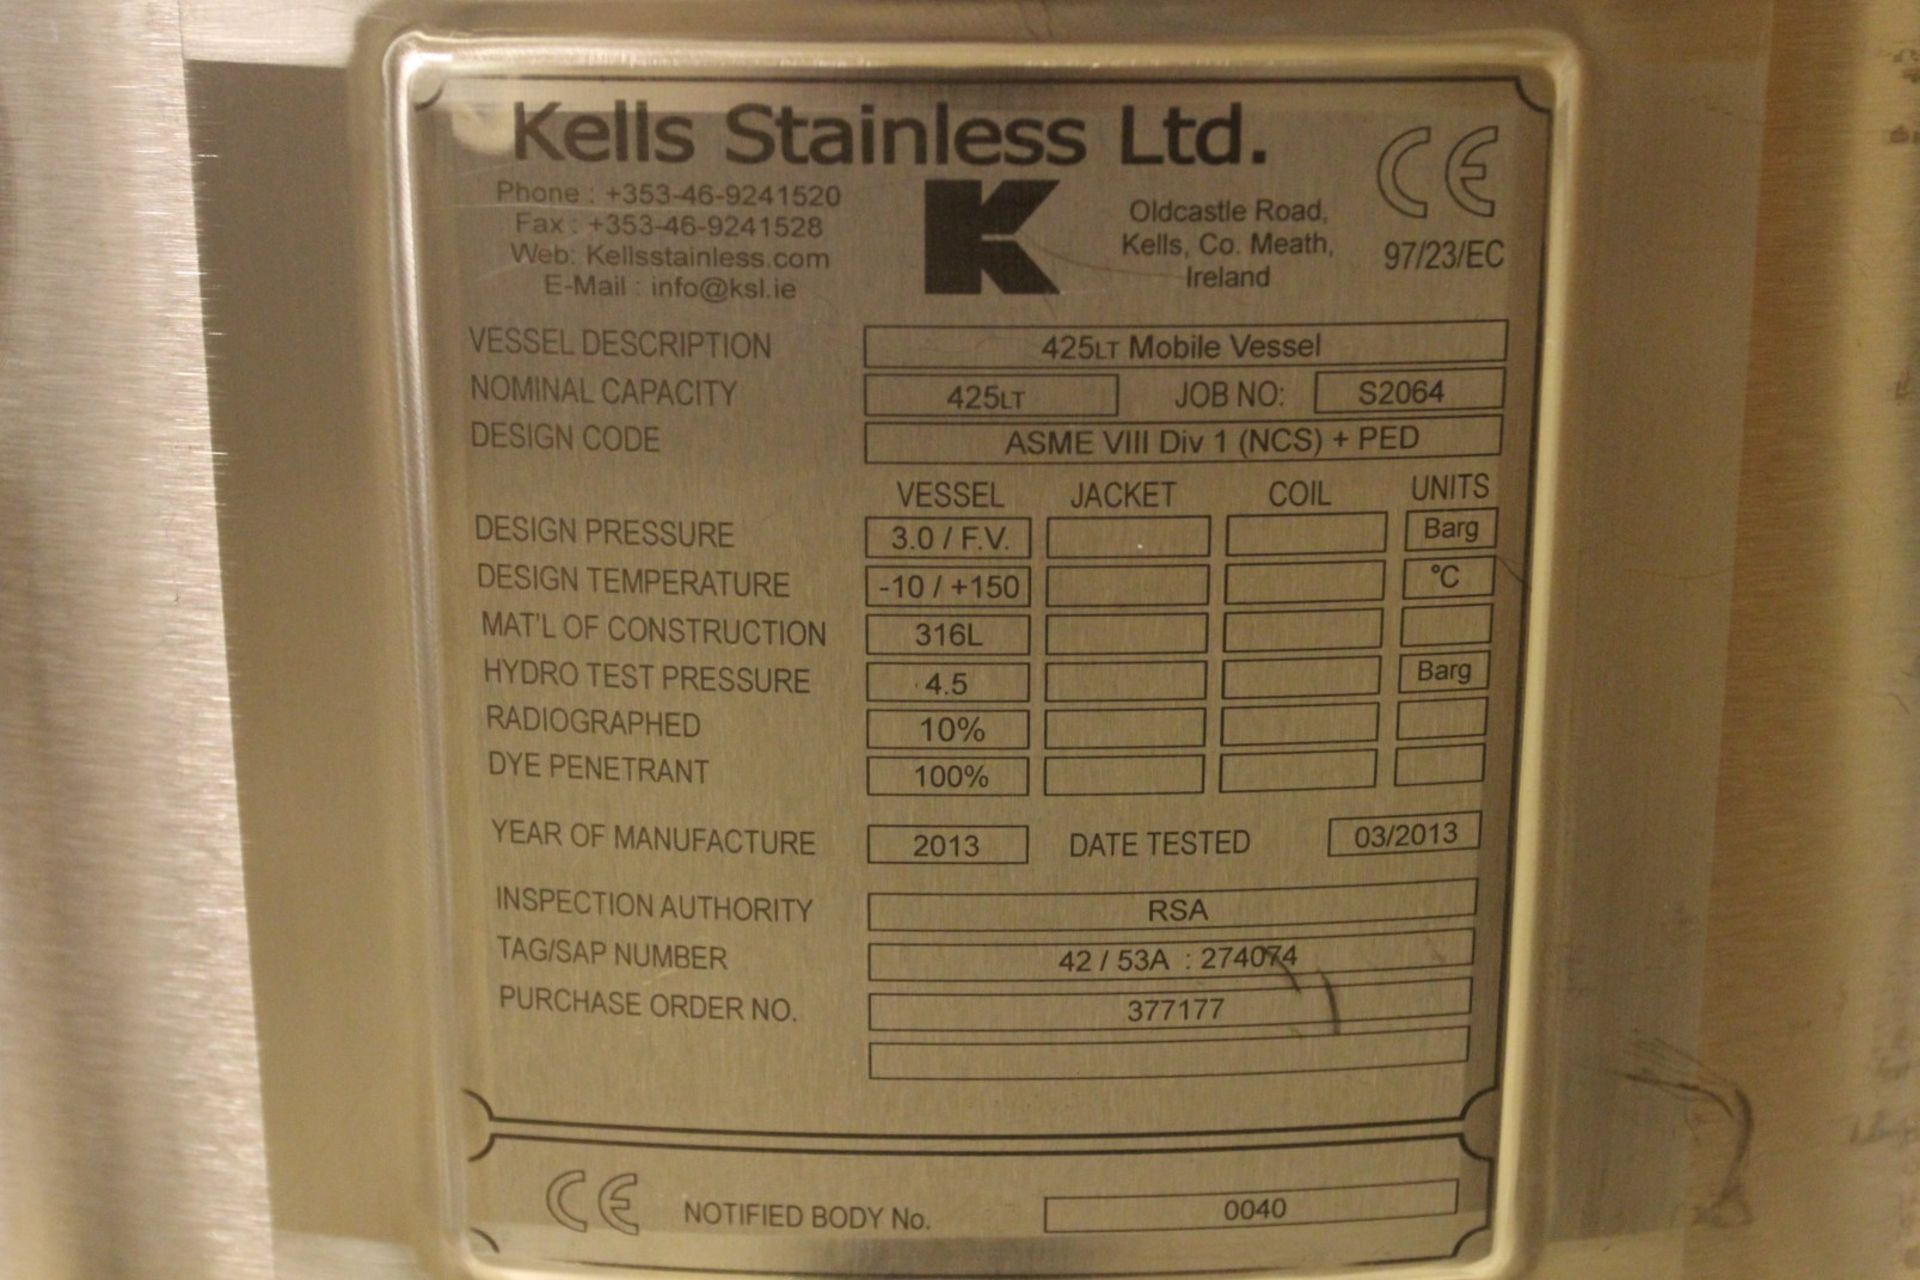 2013 Kells Stainless 425LT Mobile Vessel, Job No S2064, 425 Liter Capacity, 316L Stainless Steel - Image 3 of 3